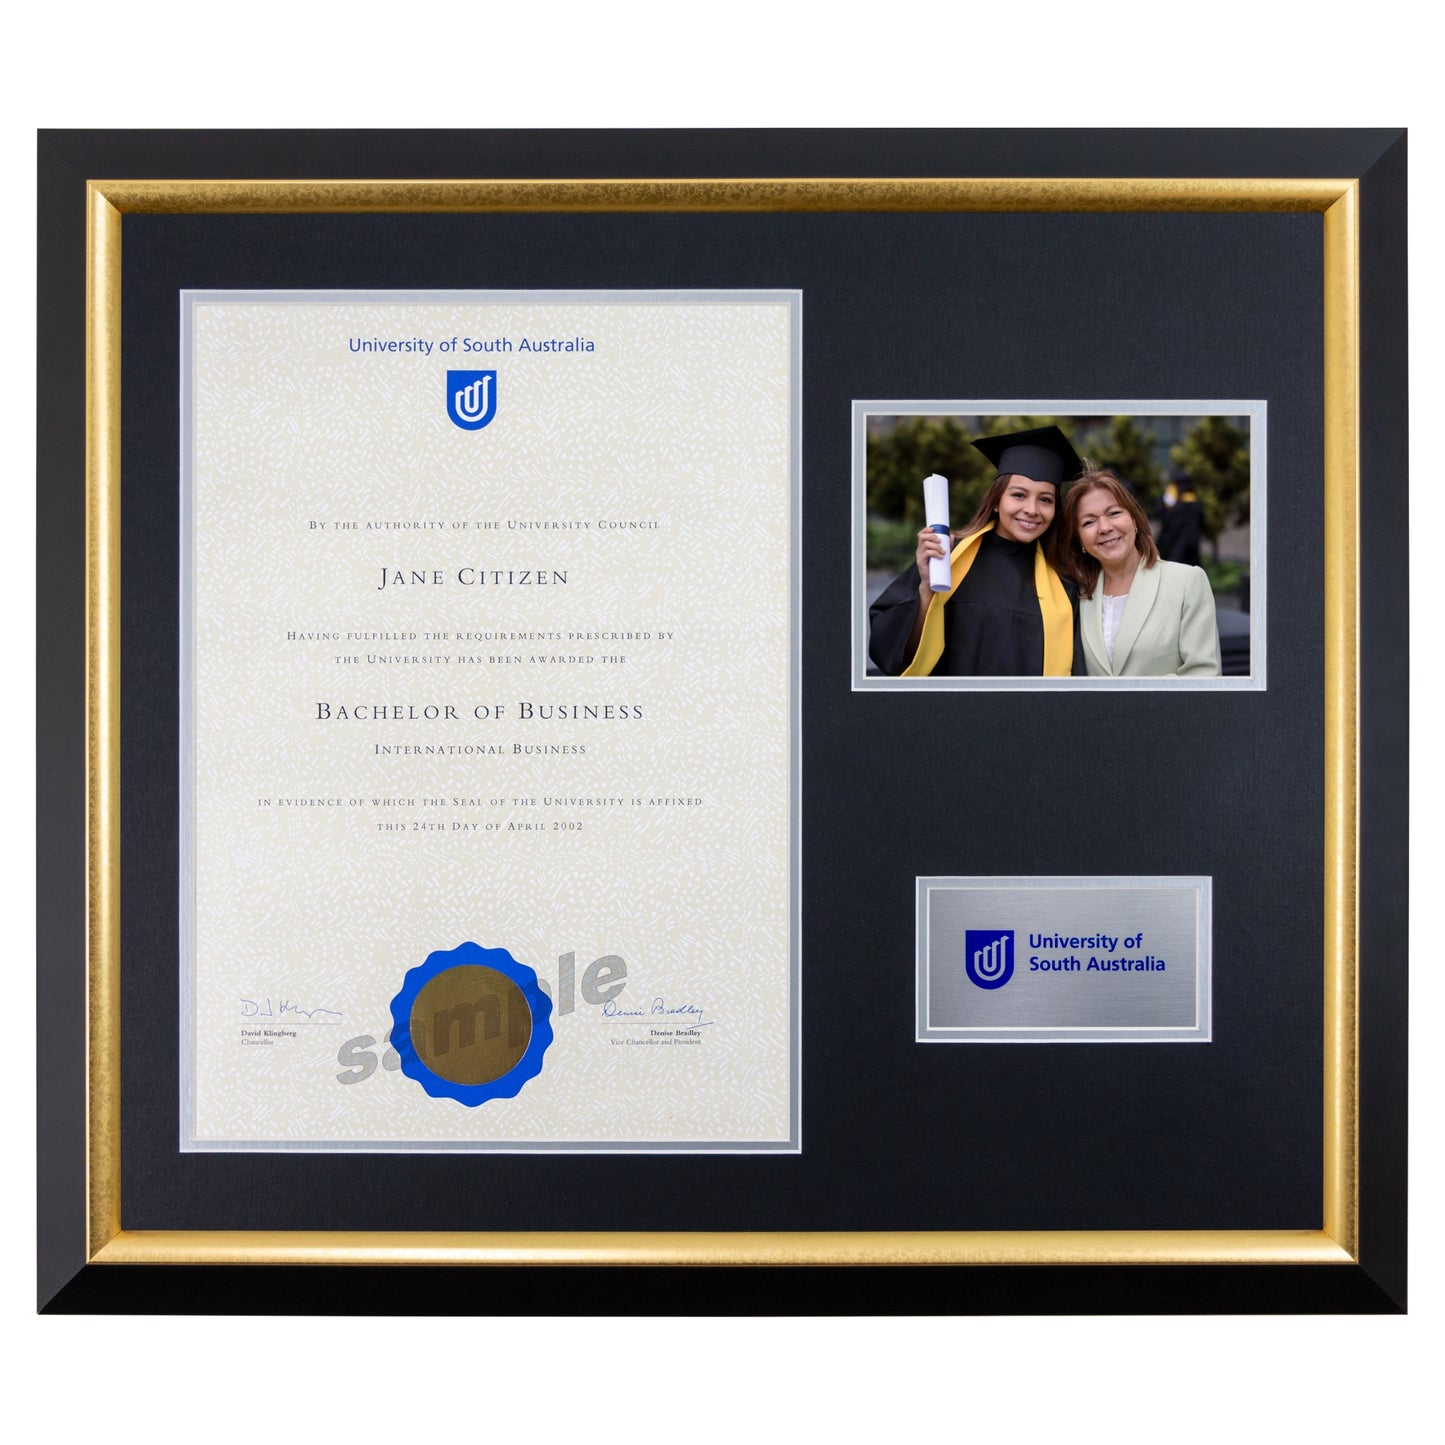 University of South Australia Photo Certificate Frame - Premium Gold